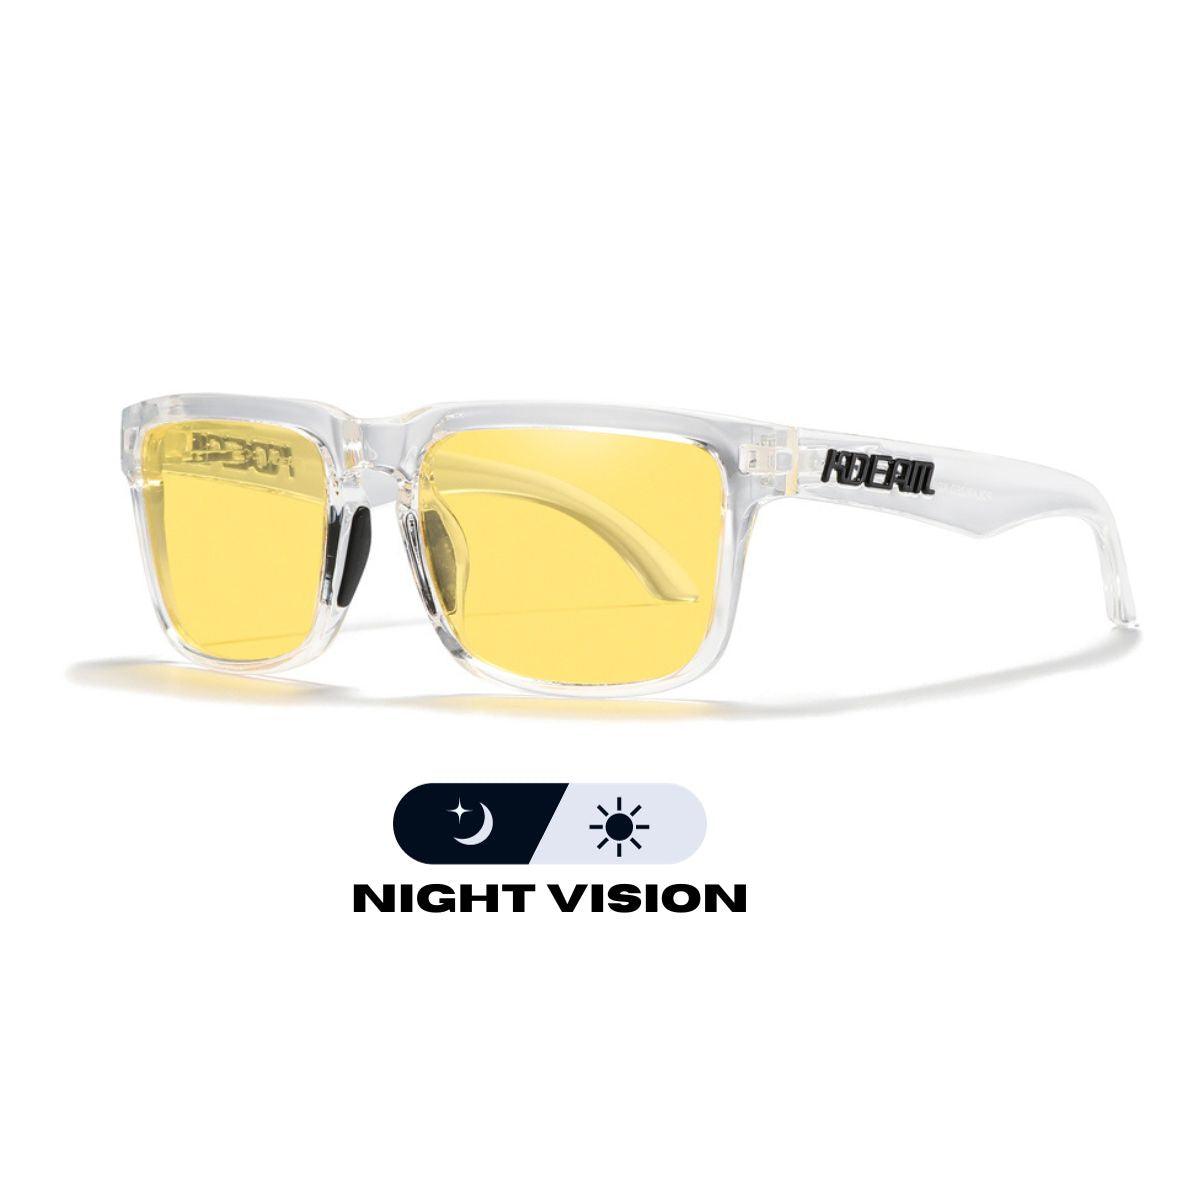 Kdeam KD332 C36 Night Vision Polarized Sunglasses